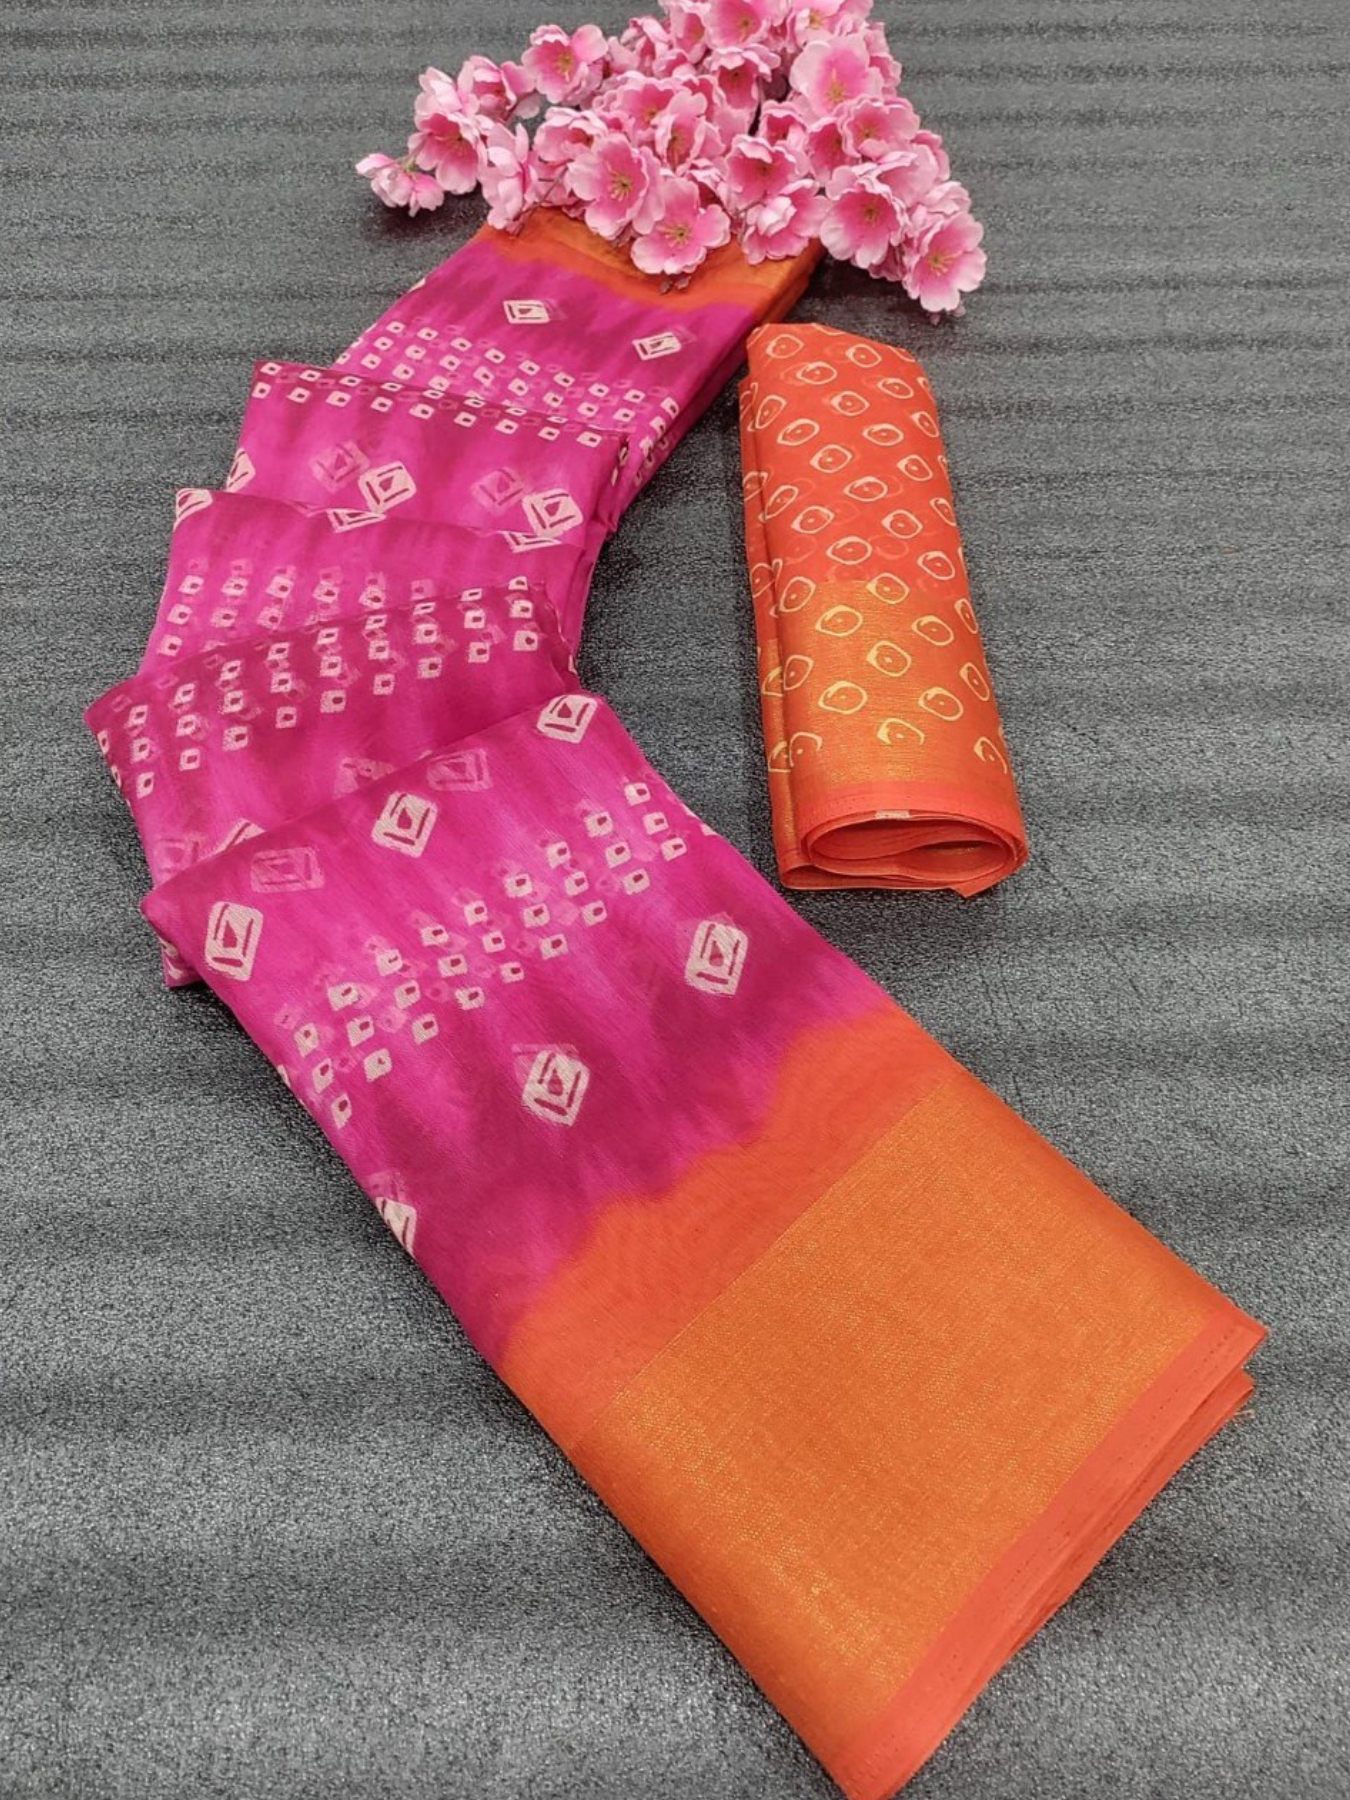 Meena Textile in jaipur - manufacturer Stylish Block Print Cotton Sarees,  Ladies Exclusive Cotton Dress Materials rajasthan